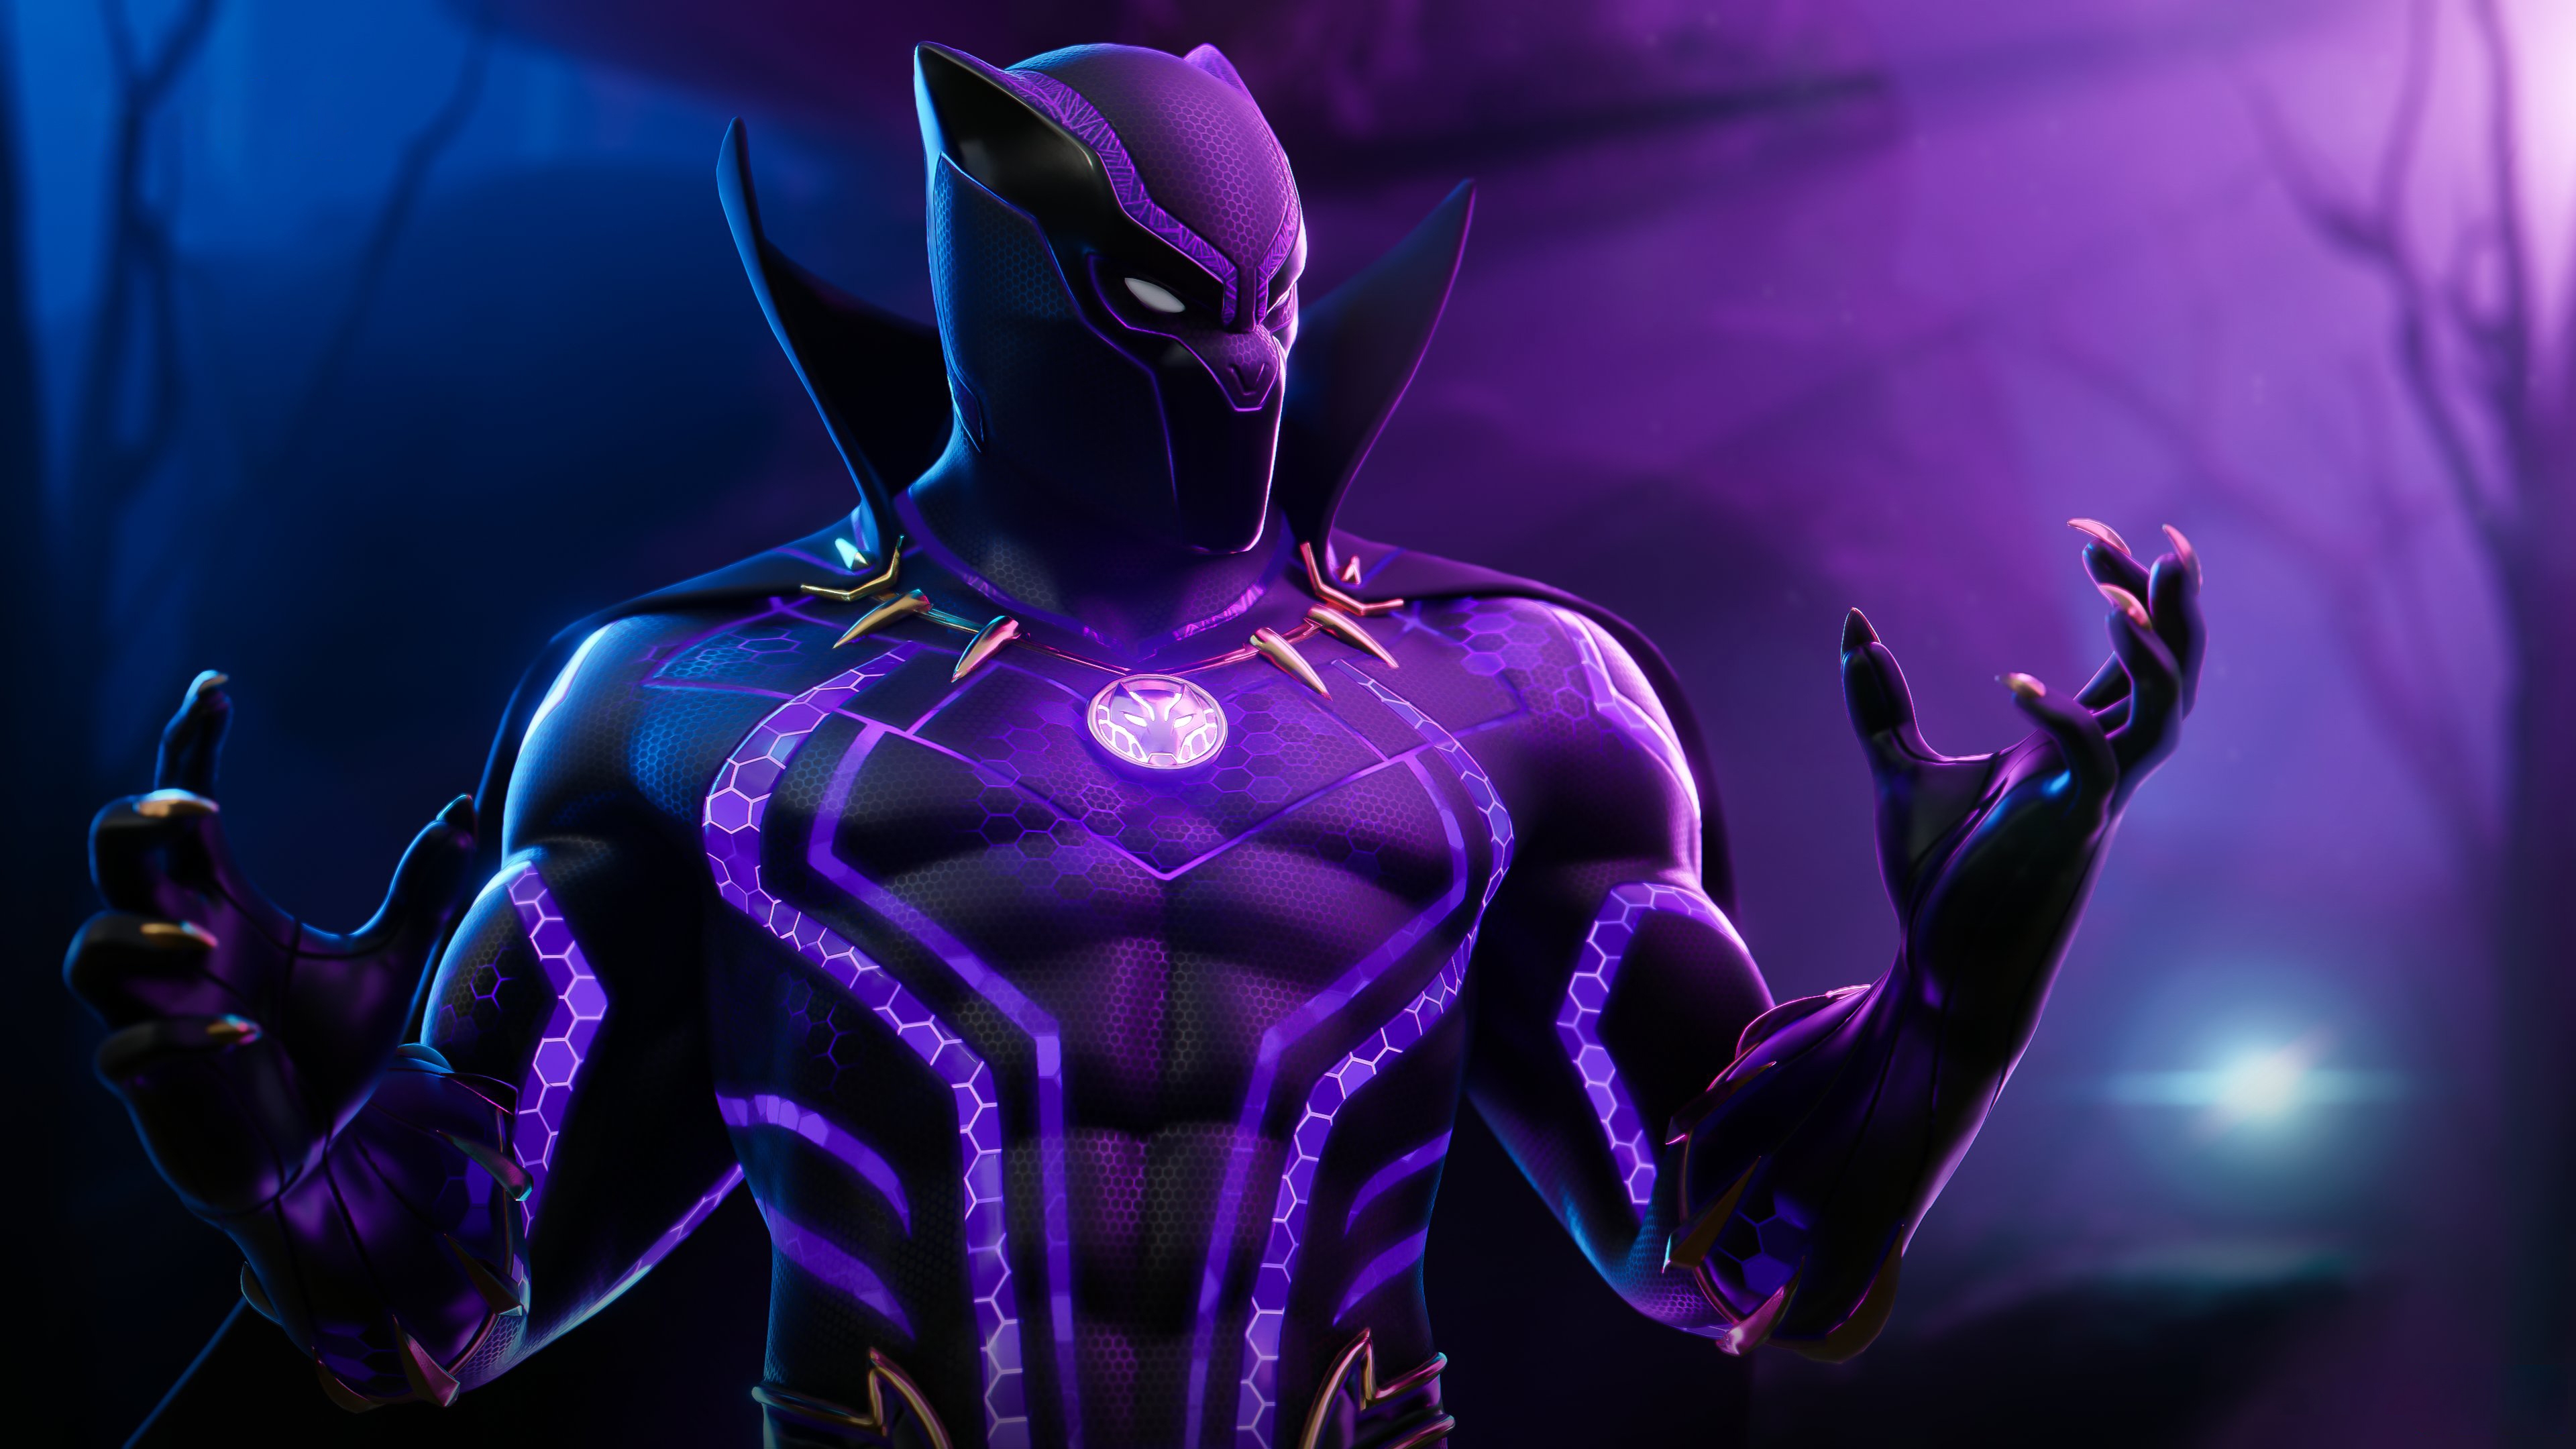 HD wallpaper, Neon, Skin, Fortnite, 2020 Games, Black Panther